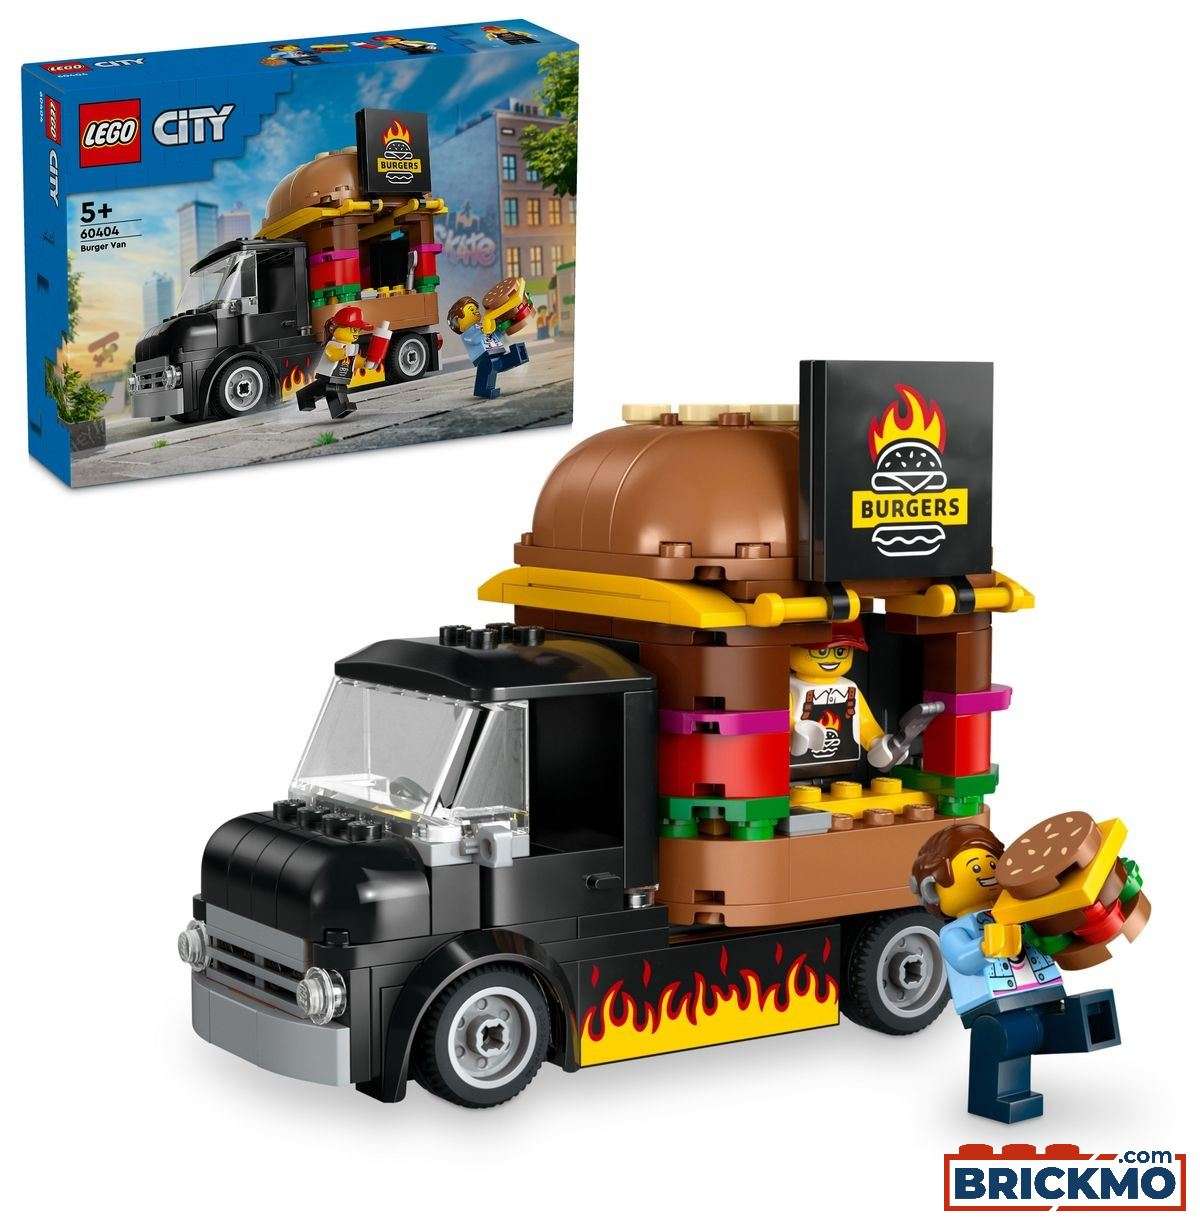 LEGO City 60404 Burger Truck 60404